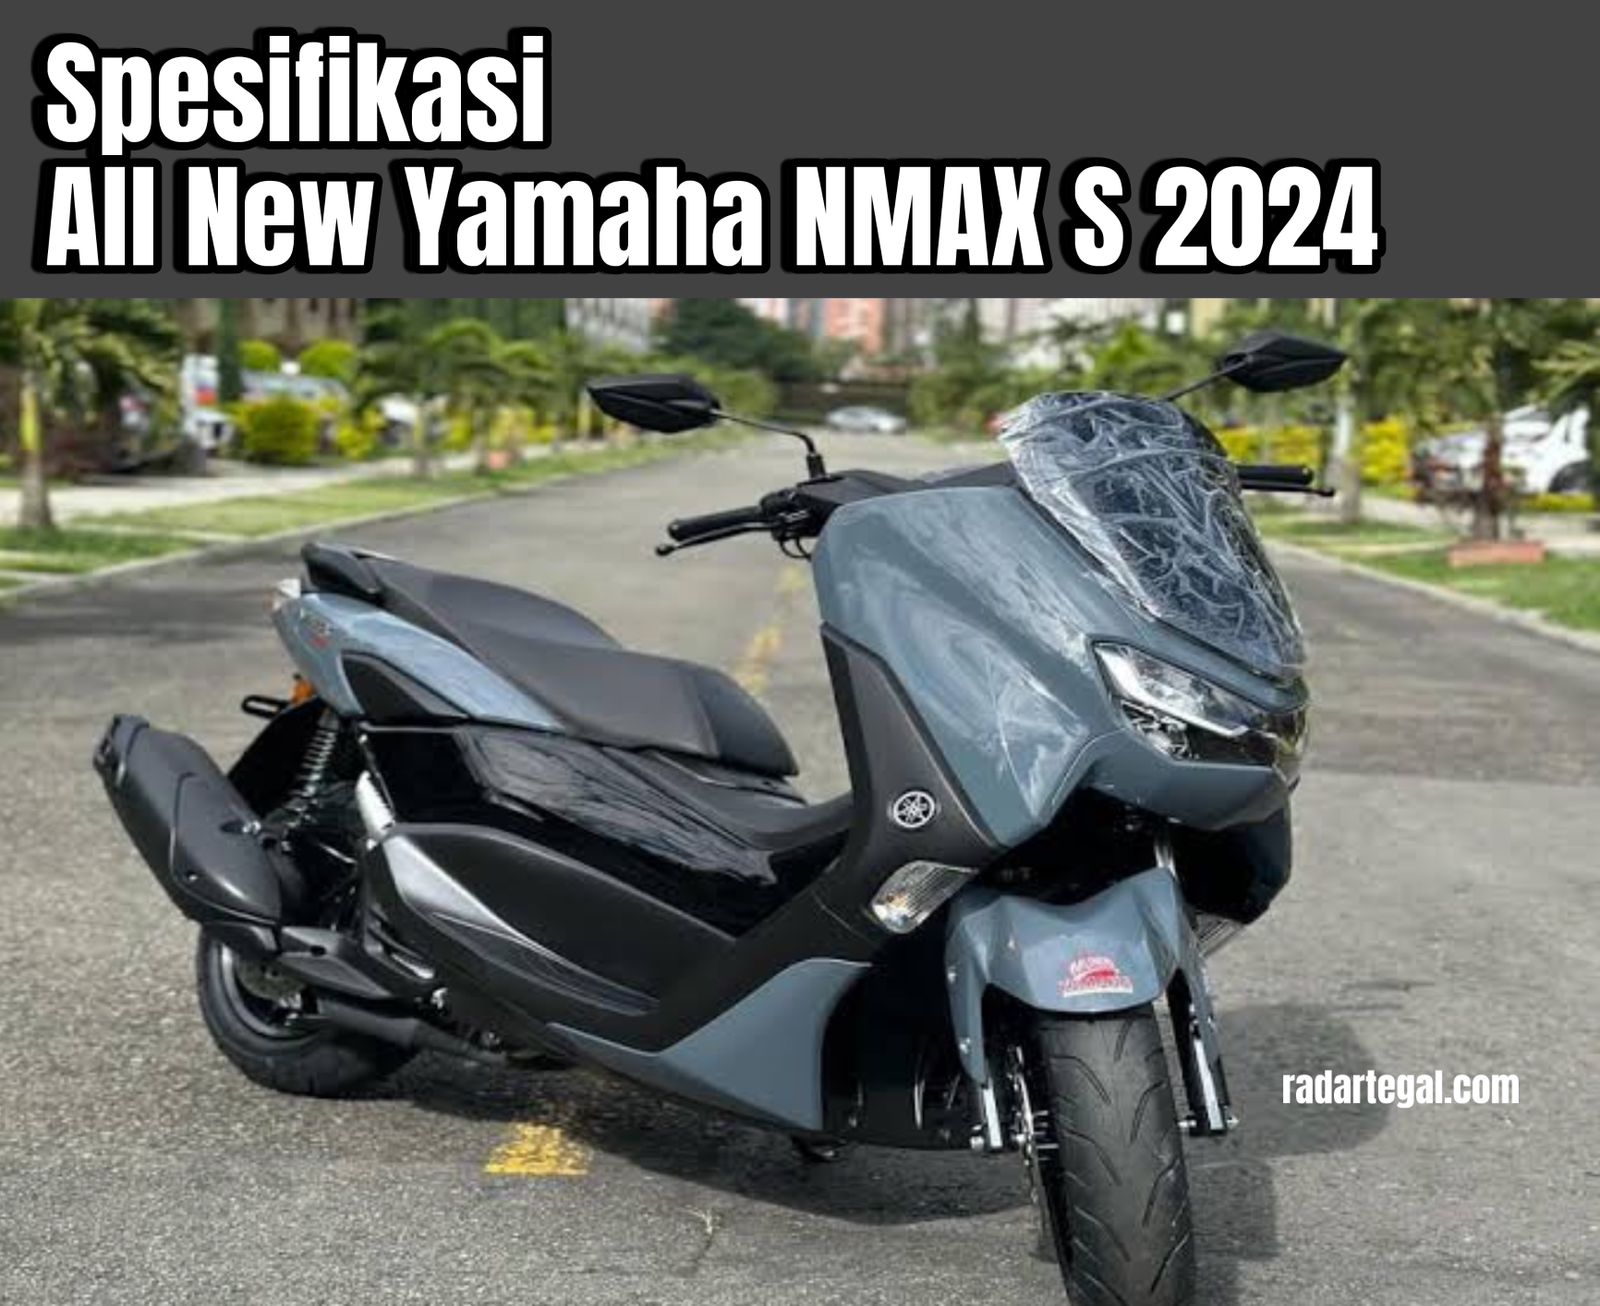 Pilihan Skutik Premium, Intip Spesifikasi All New Yamaha NMAX S 2024, Siap Dibawa Healing Maupun Mudik